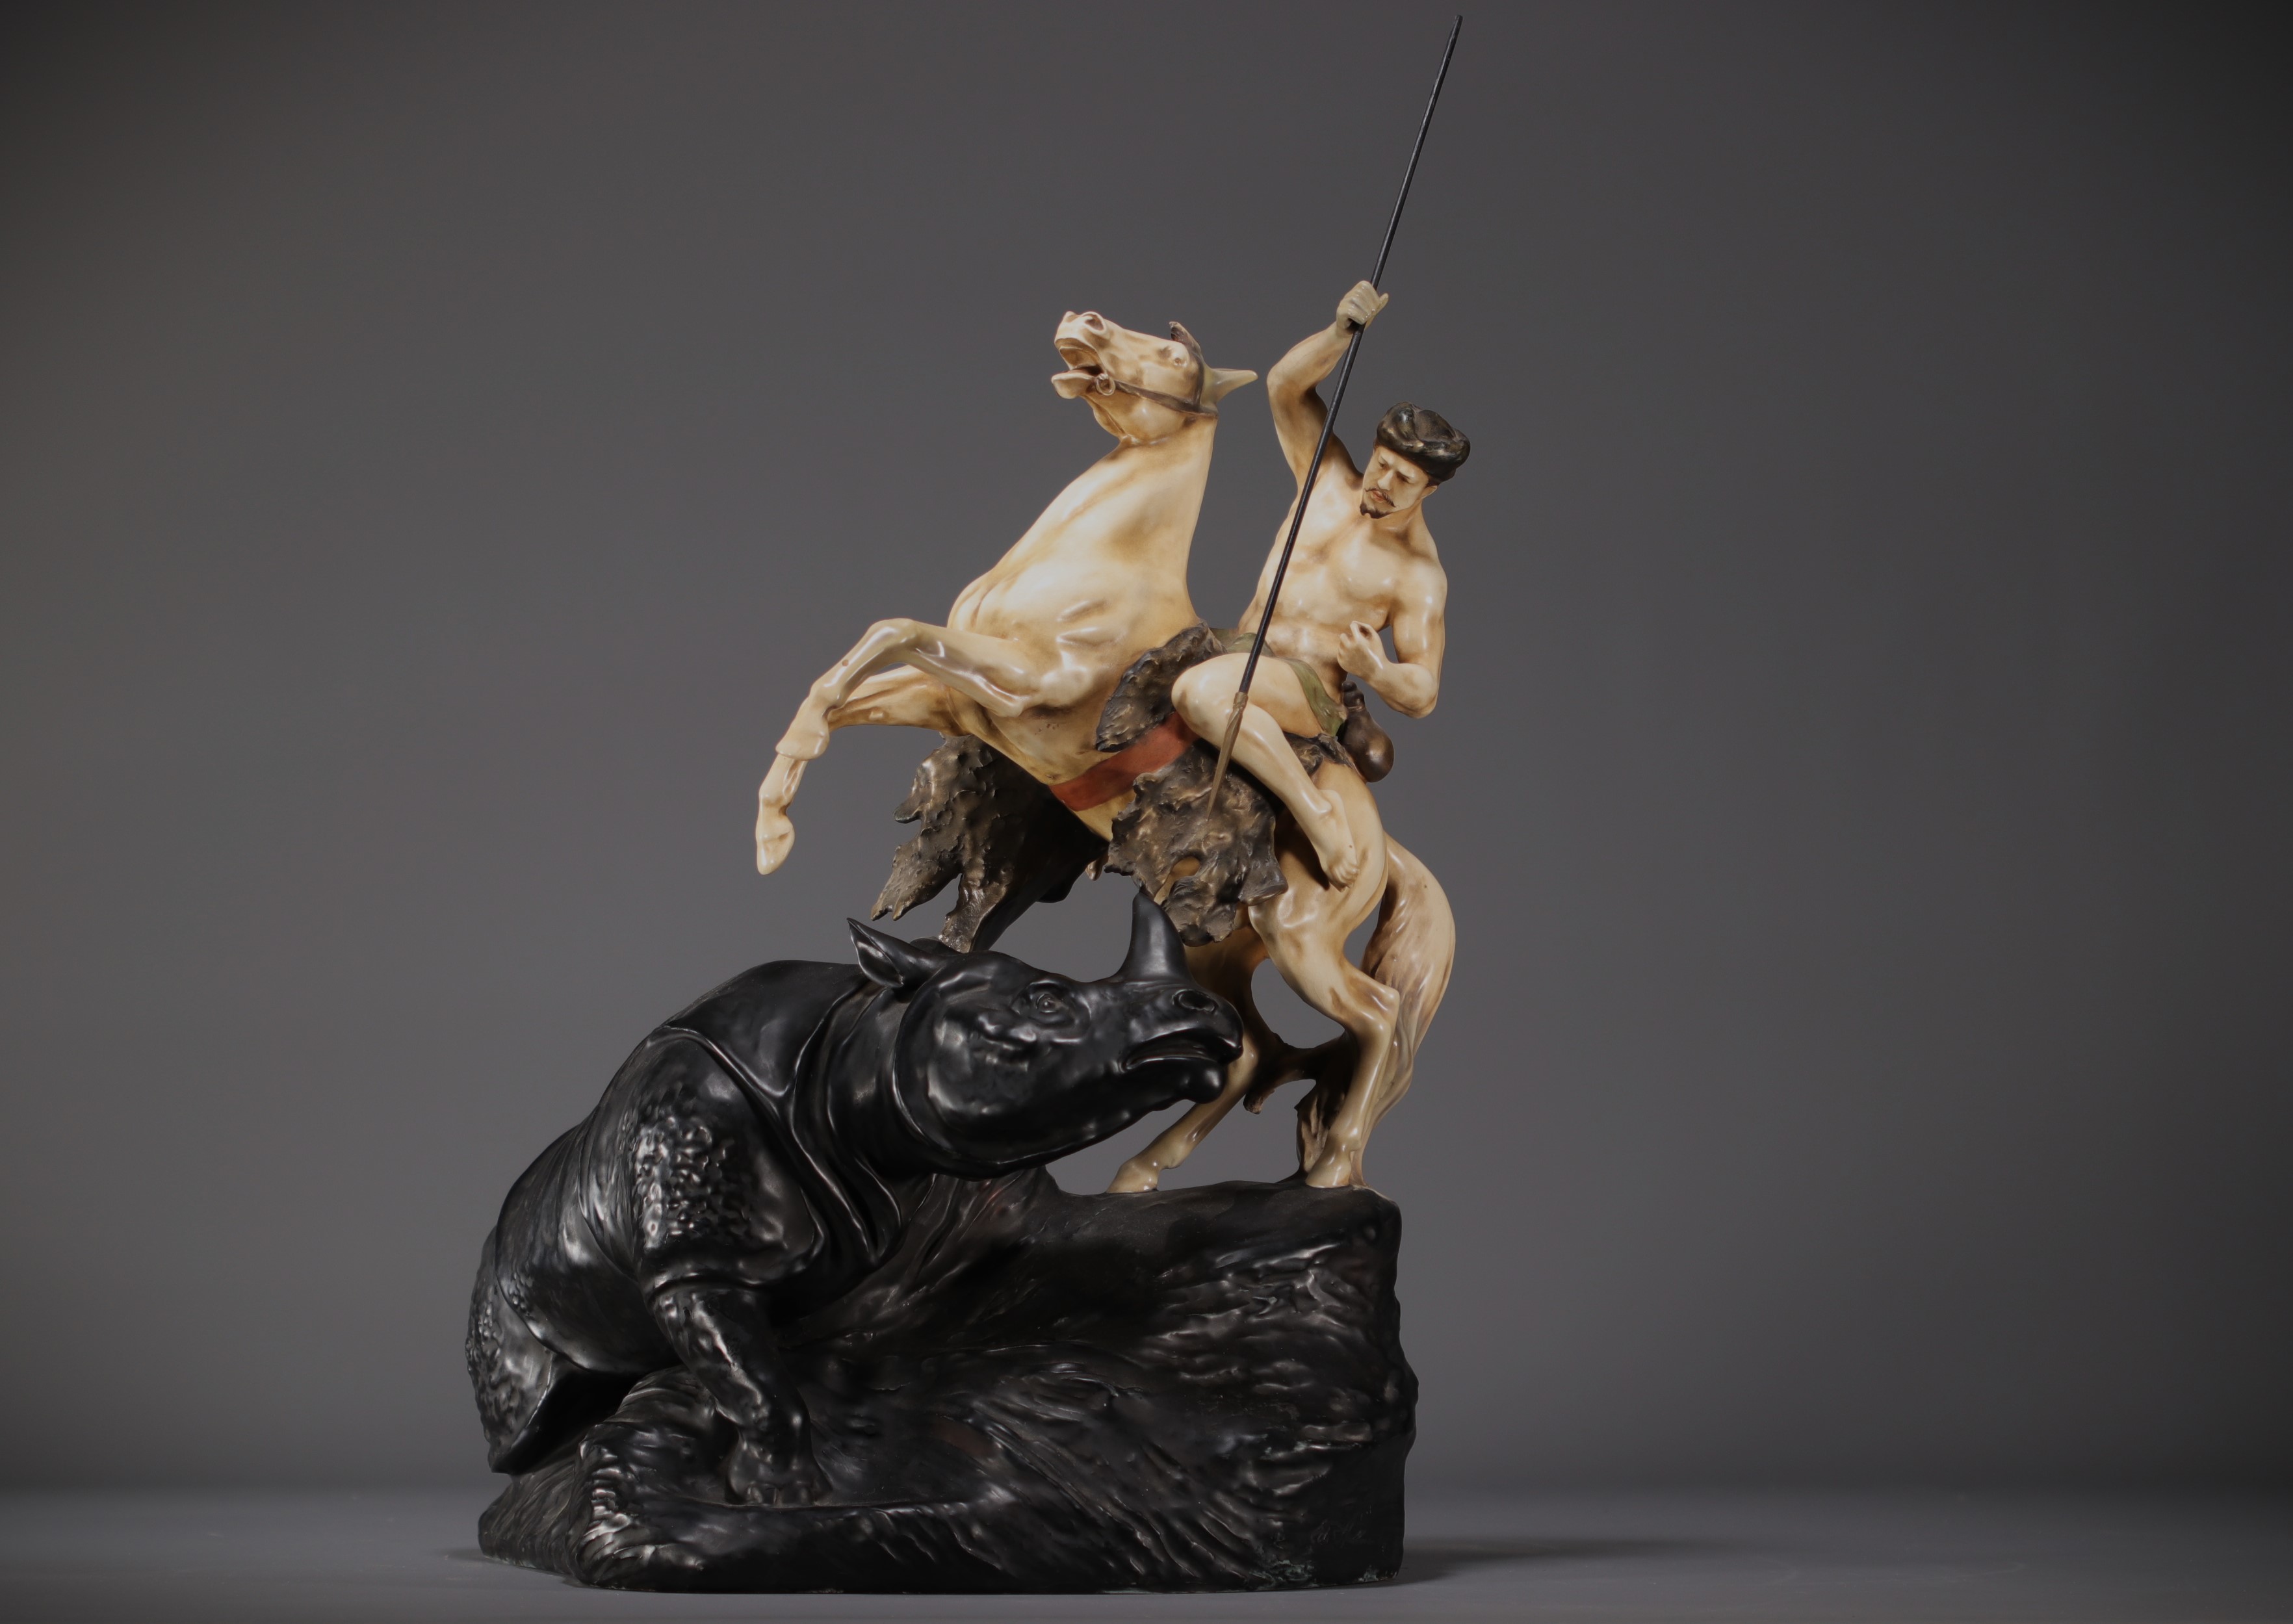 Eduard STELLMACHER (1868-1945) "Rhinoceros Hunt" Ceramic sculpture for the Teplitz factory